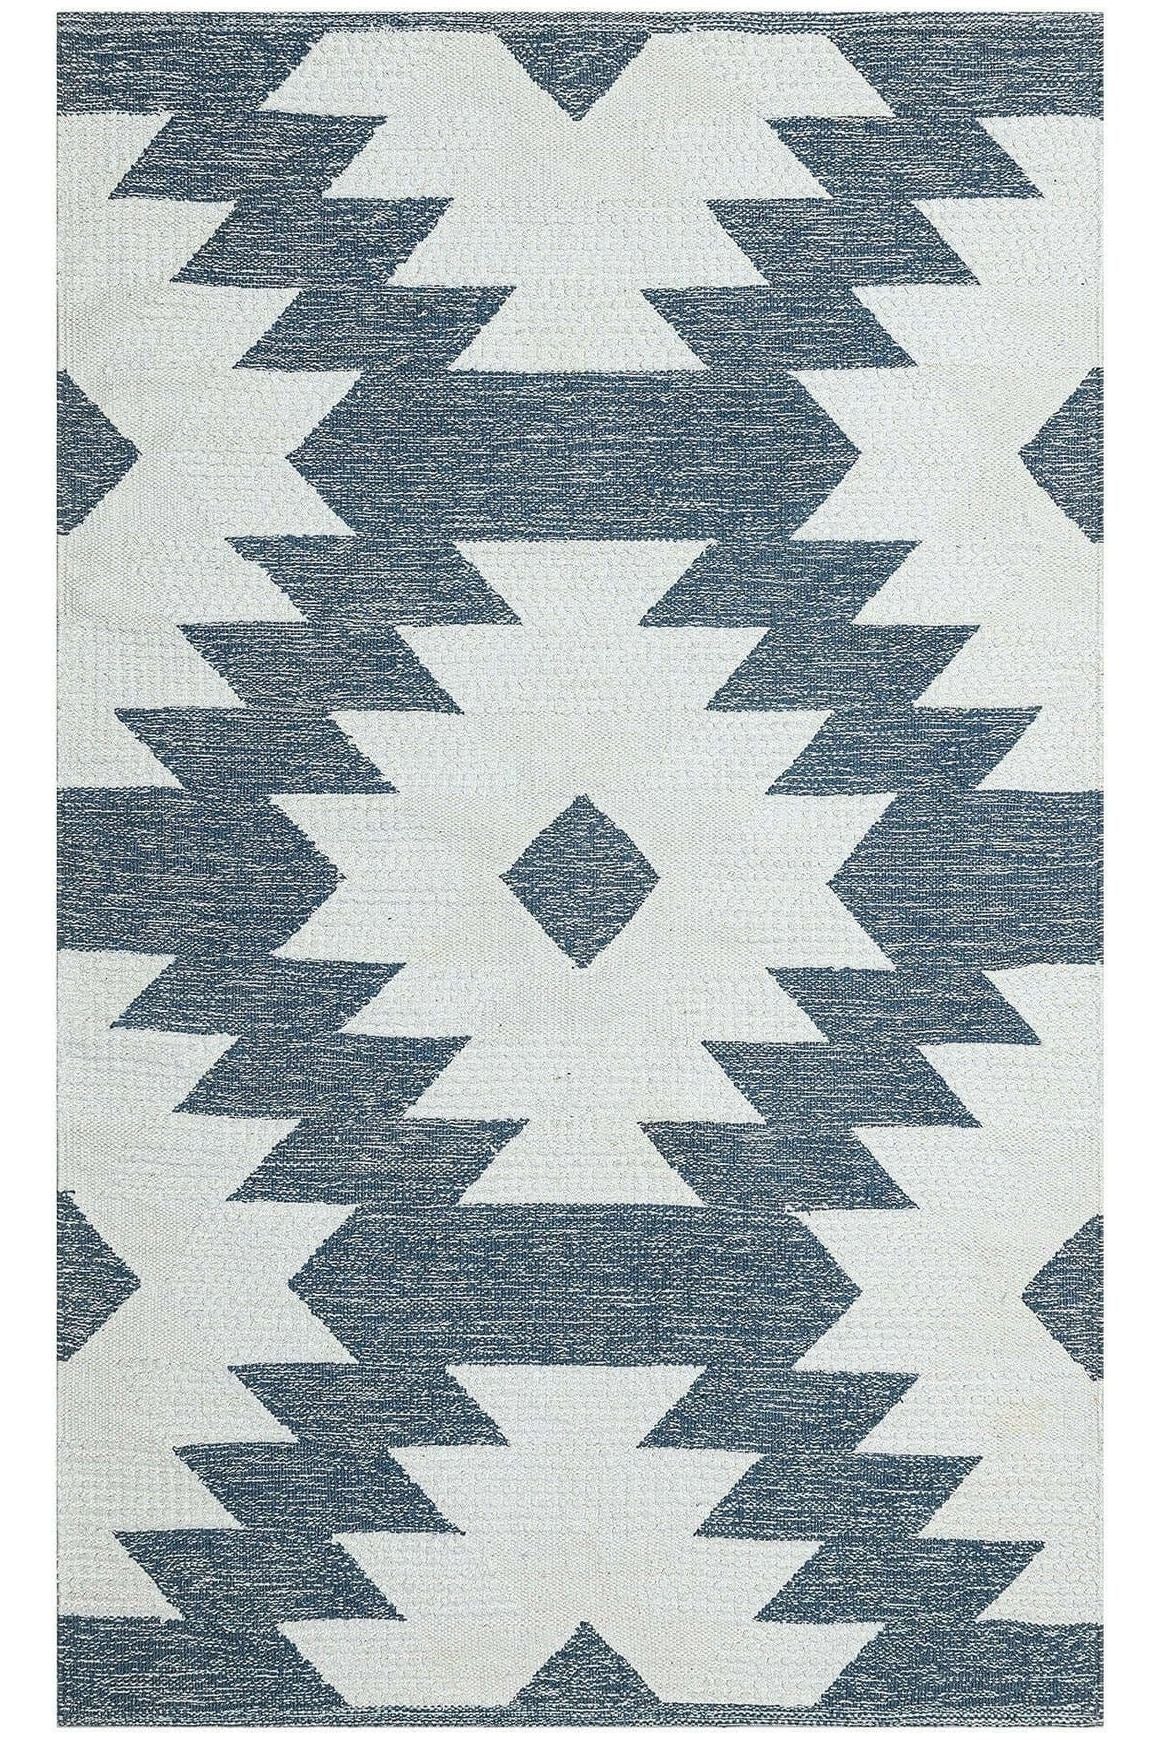 #Turkish_Carpets_Rugs# #Modern_Carpets# #Abrash_Carpets#Afr 01 Sky Blue White